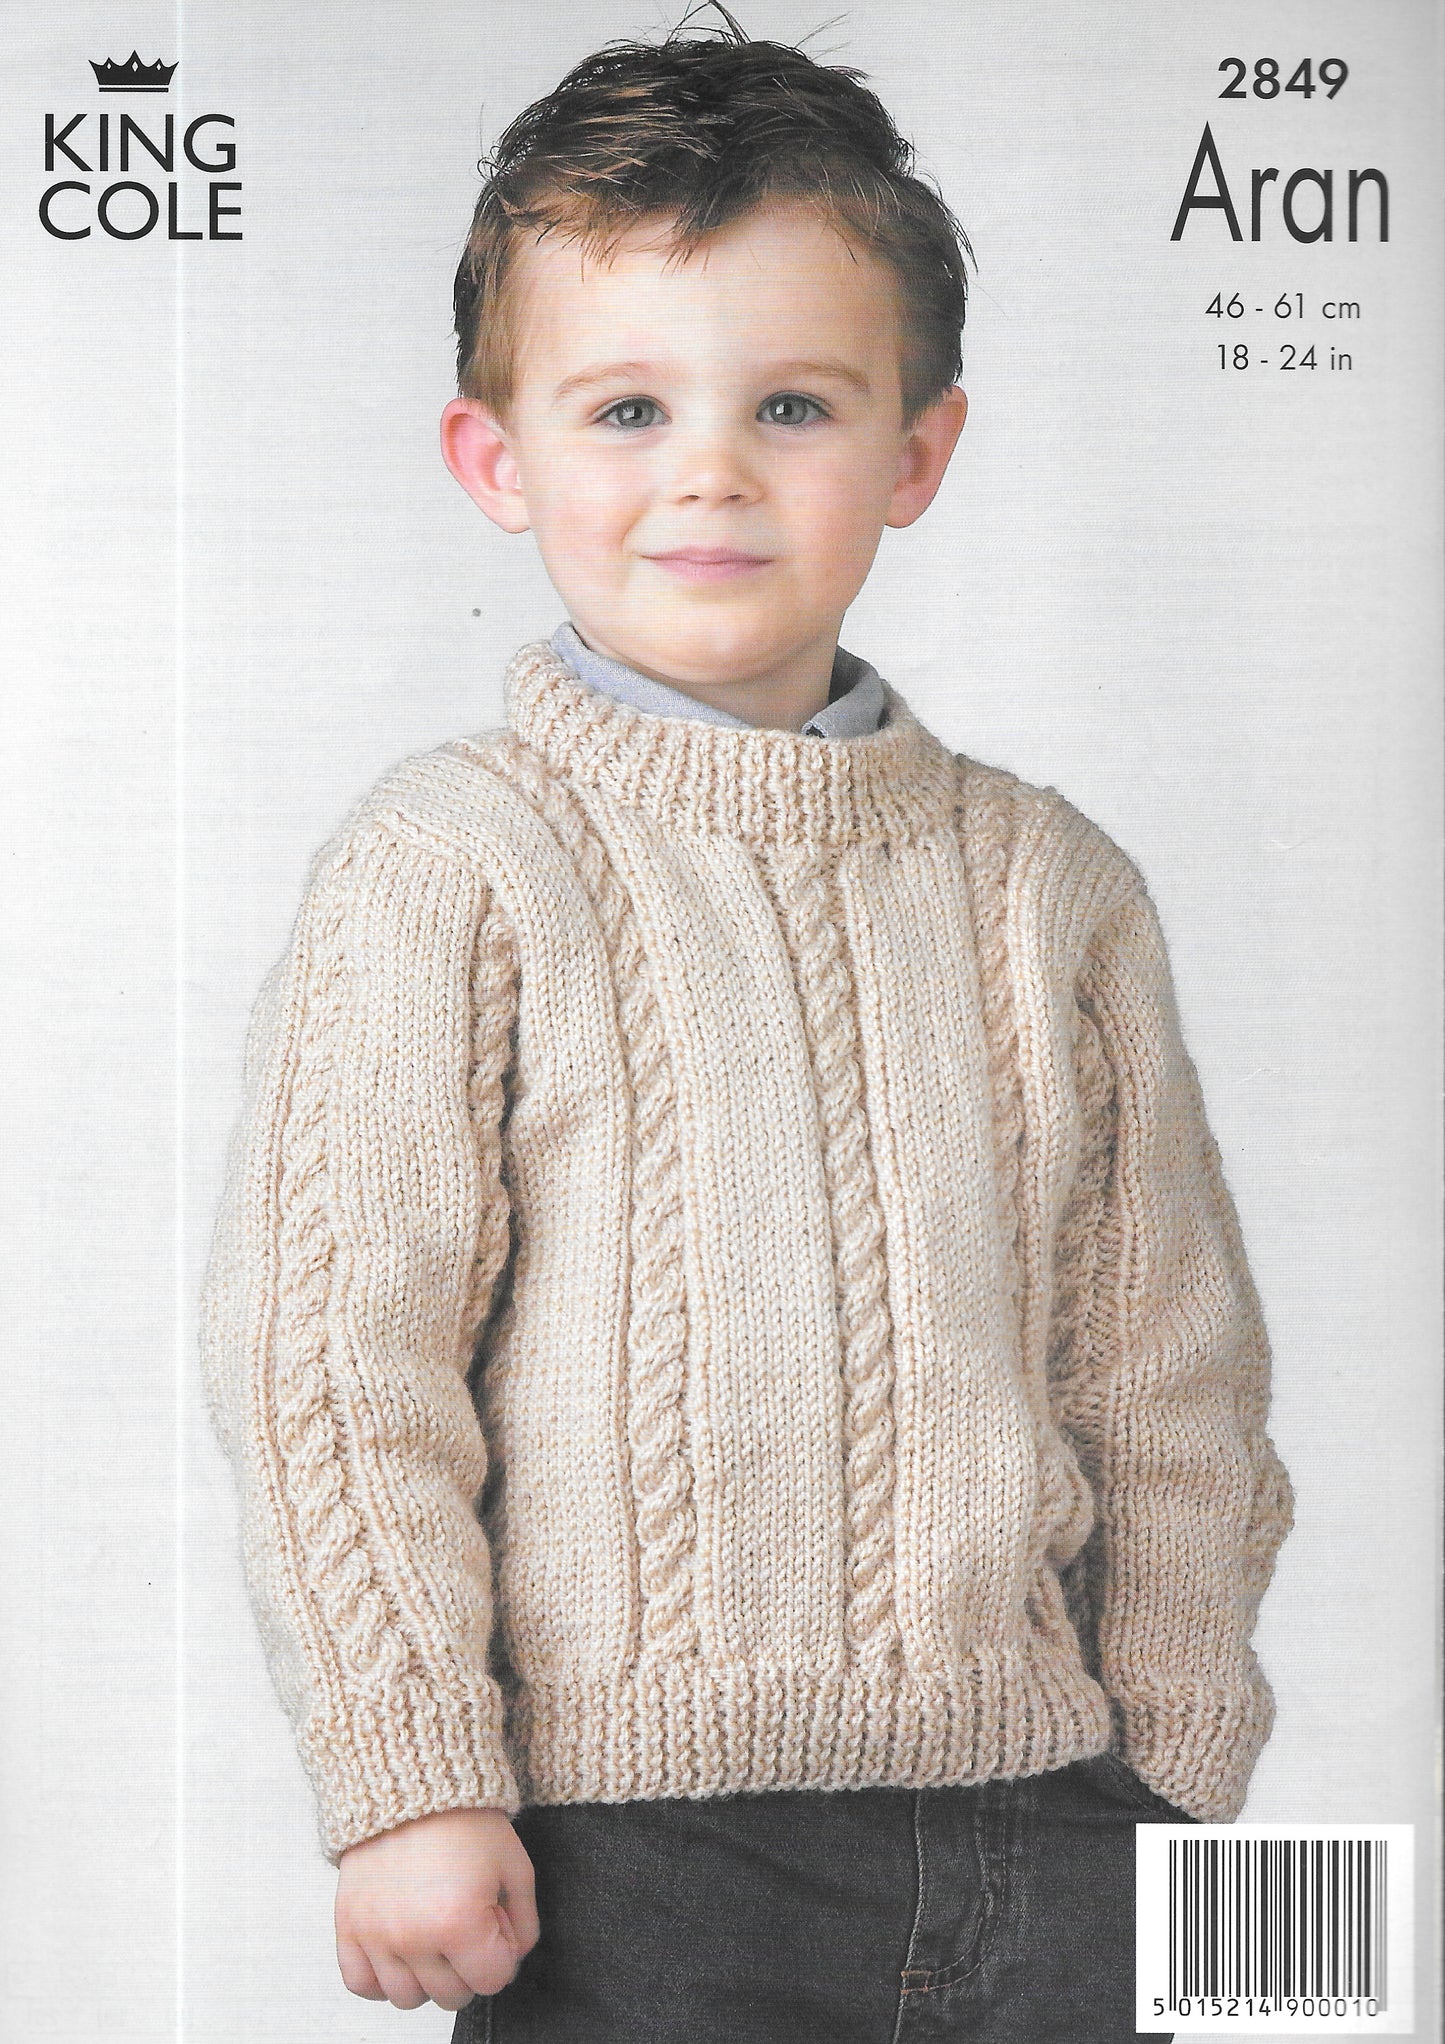 2849 King Cole knitting pattern - Child's Aran Cardigan/Sweater